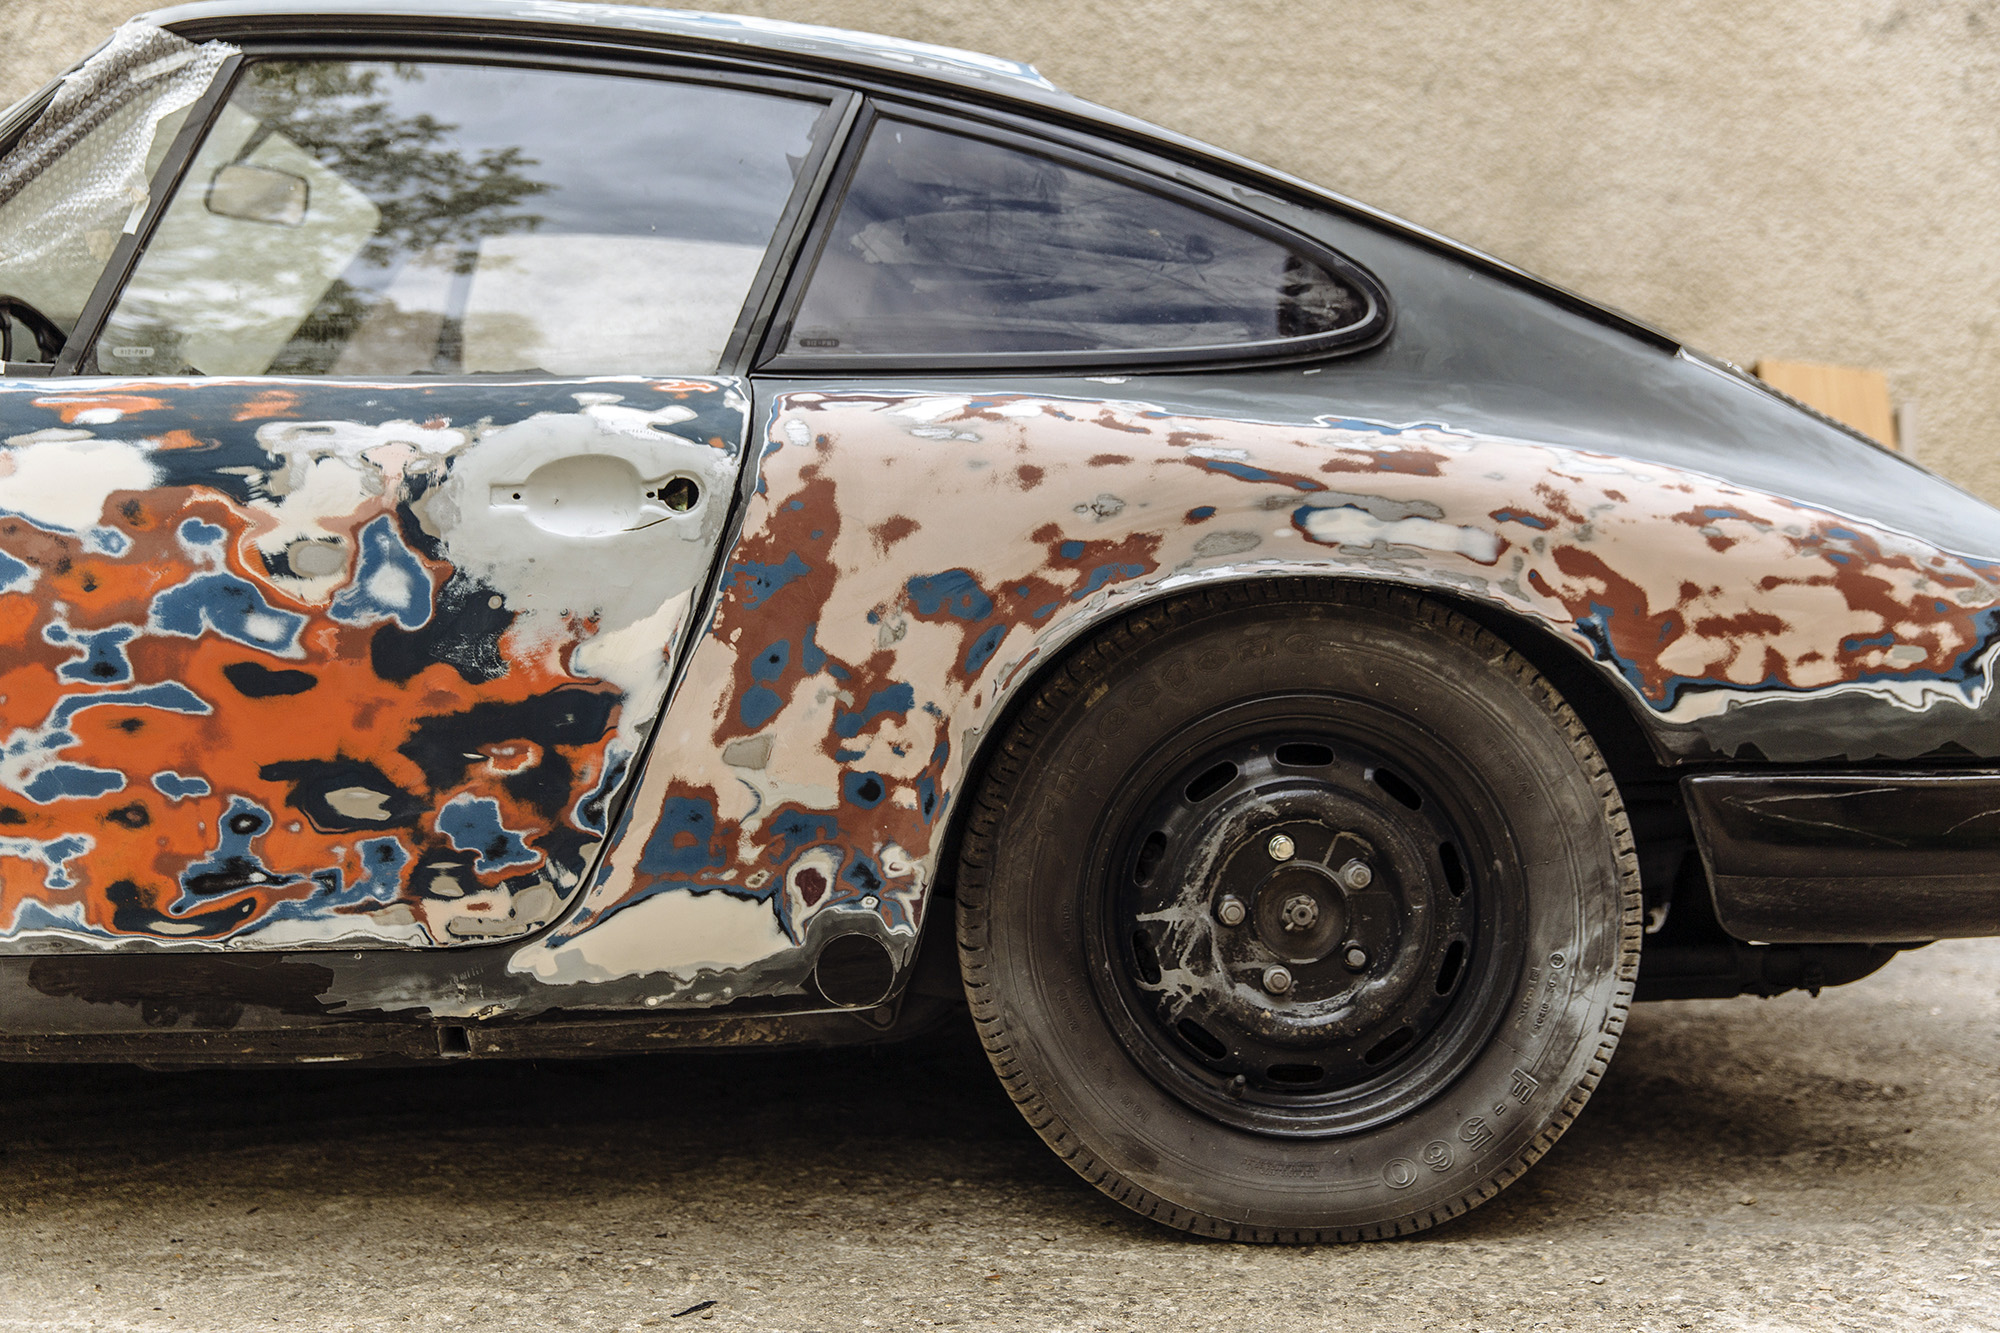 Section of Porsche 912 being restored showing bodywork changes